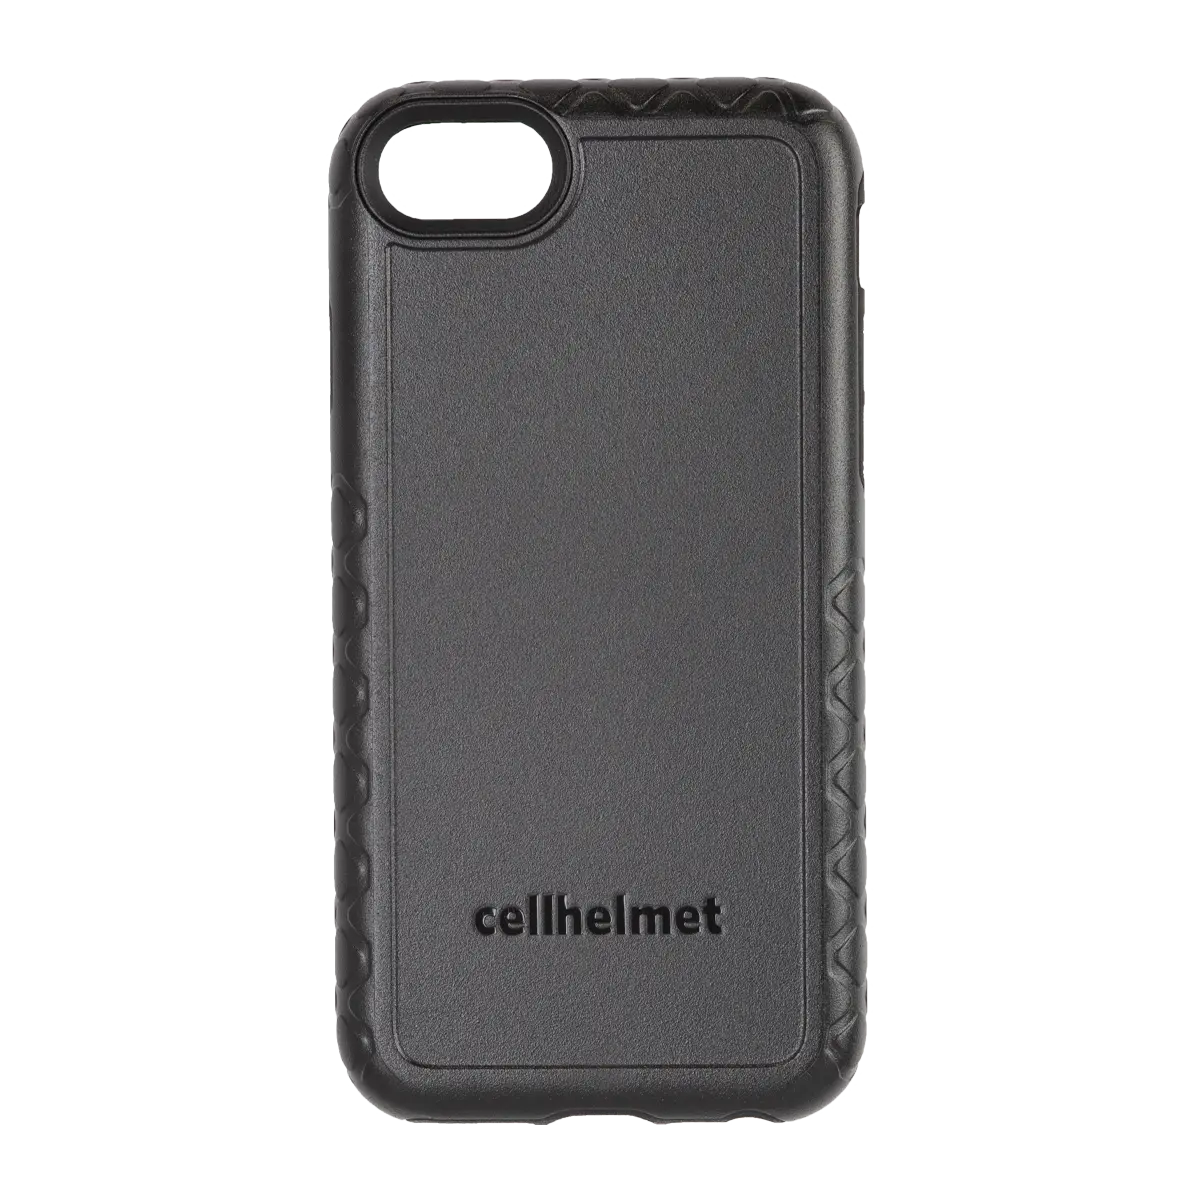 Black cellhelmet Personalized Case for iPhone SE 2020